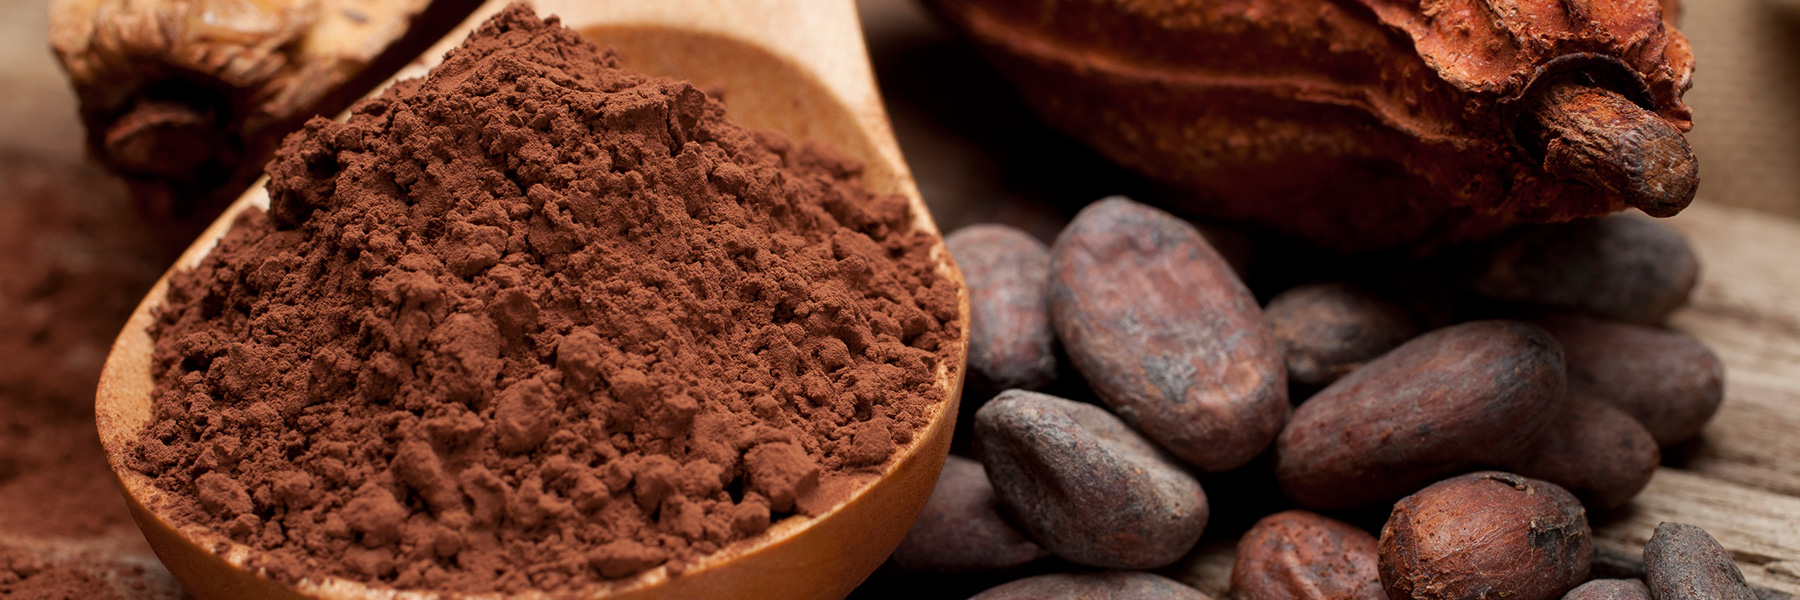 cacao benefits